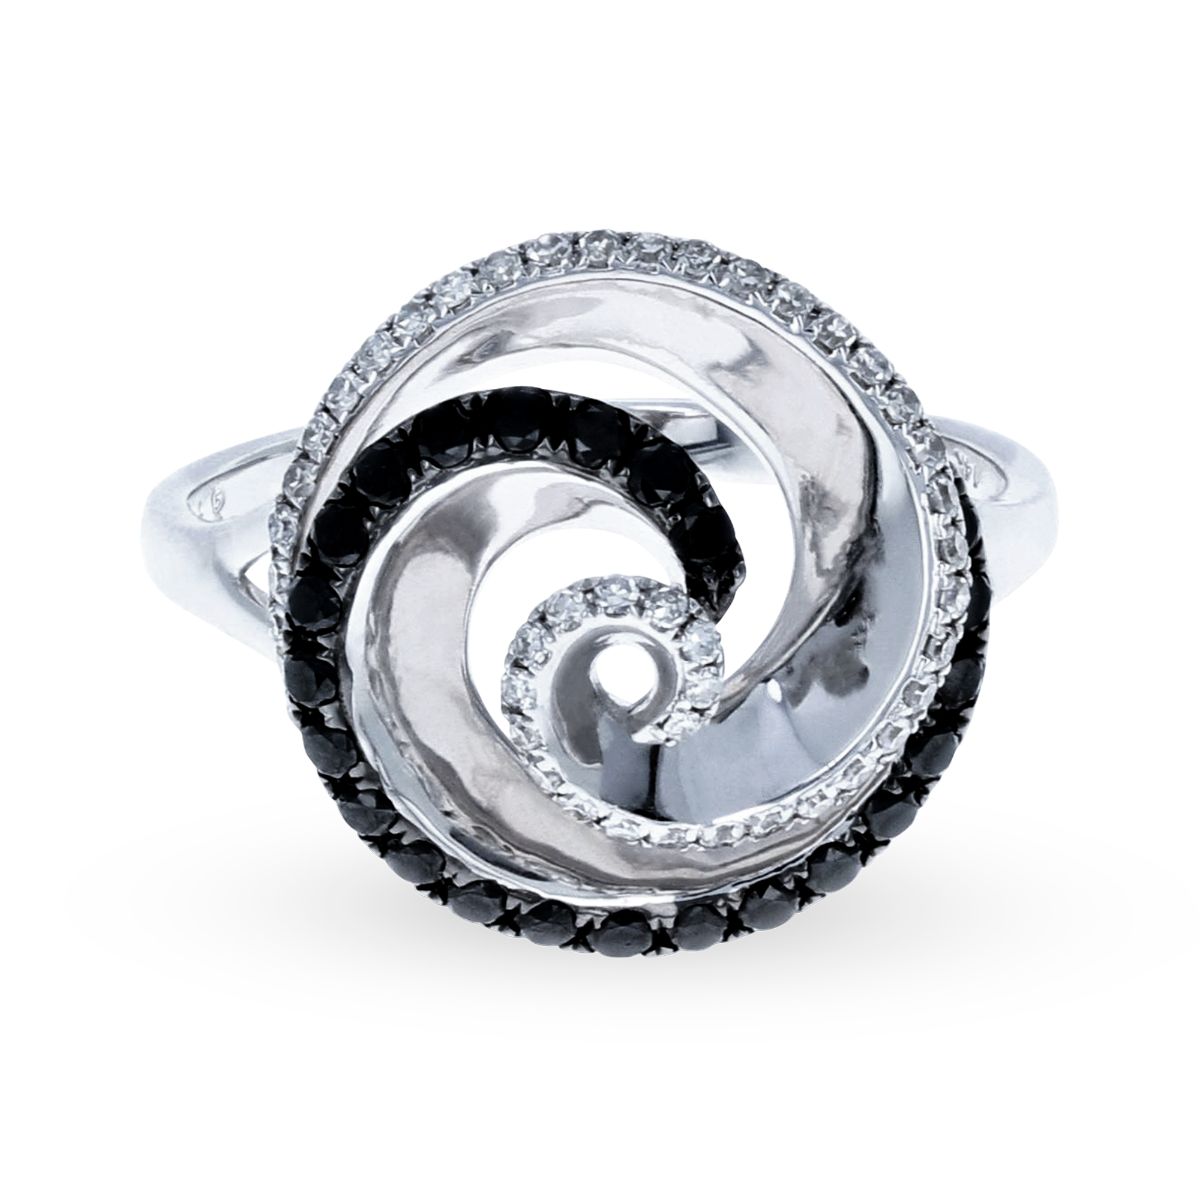 Circular Black and White Diamond Ring 14KT